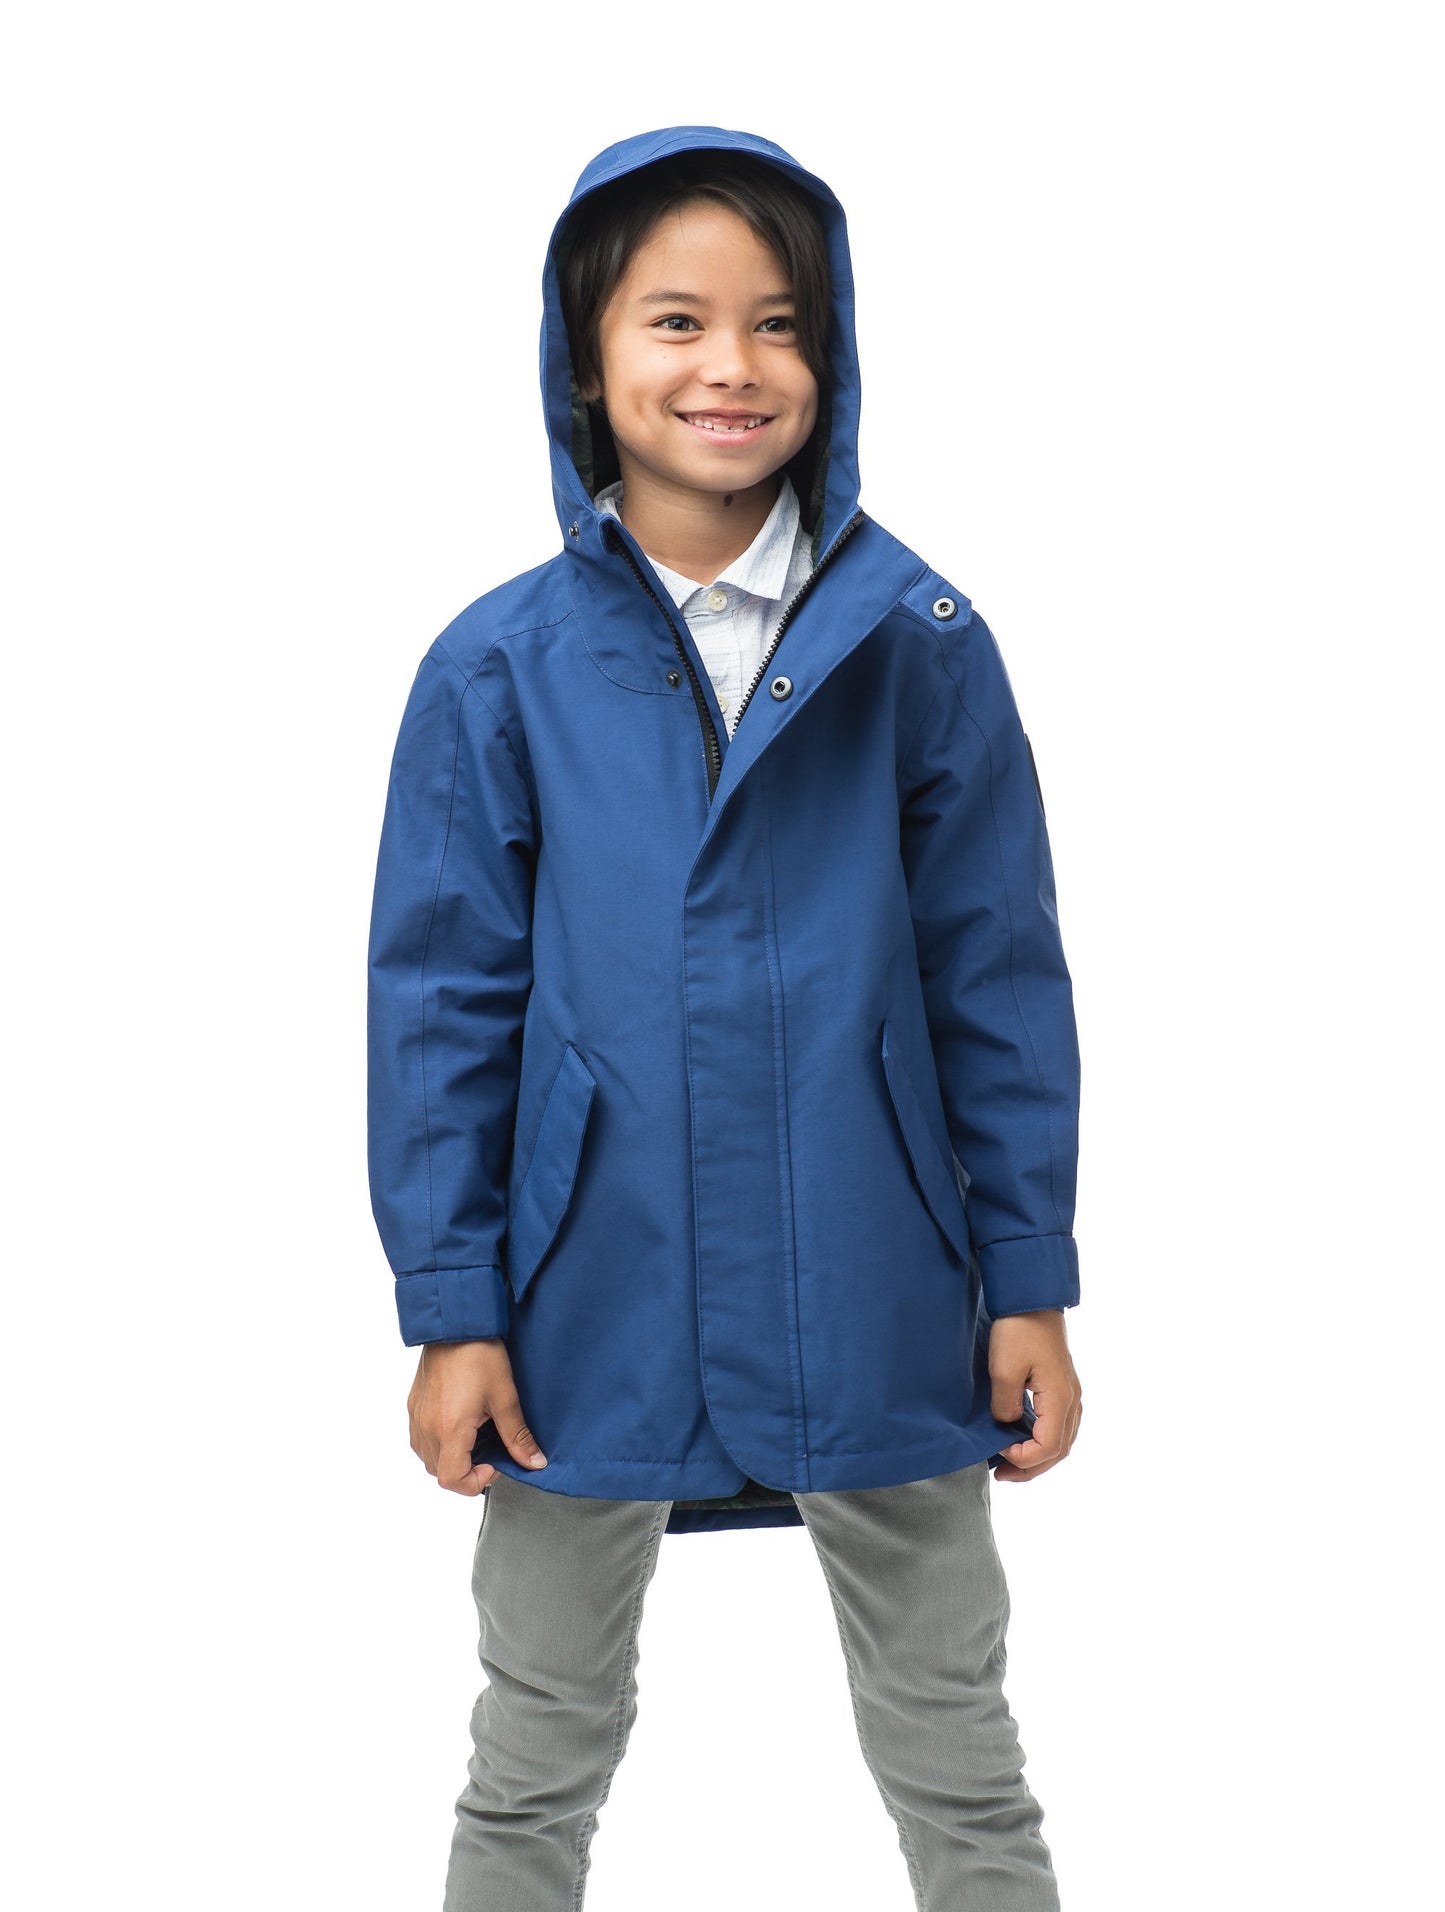 Kids' hip length raincoat with hood in Royal